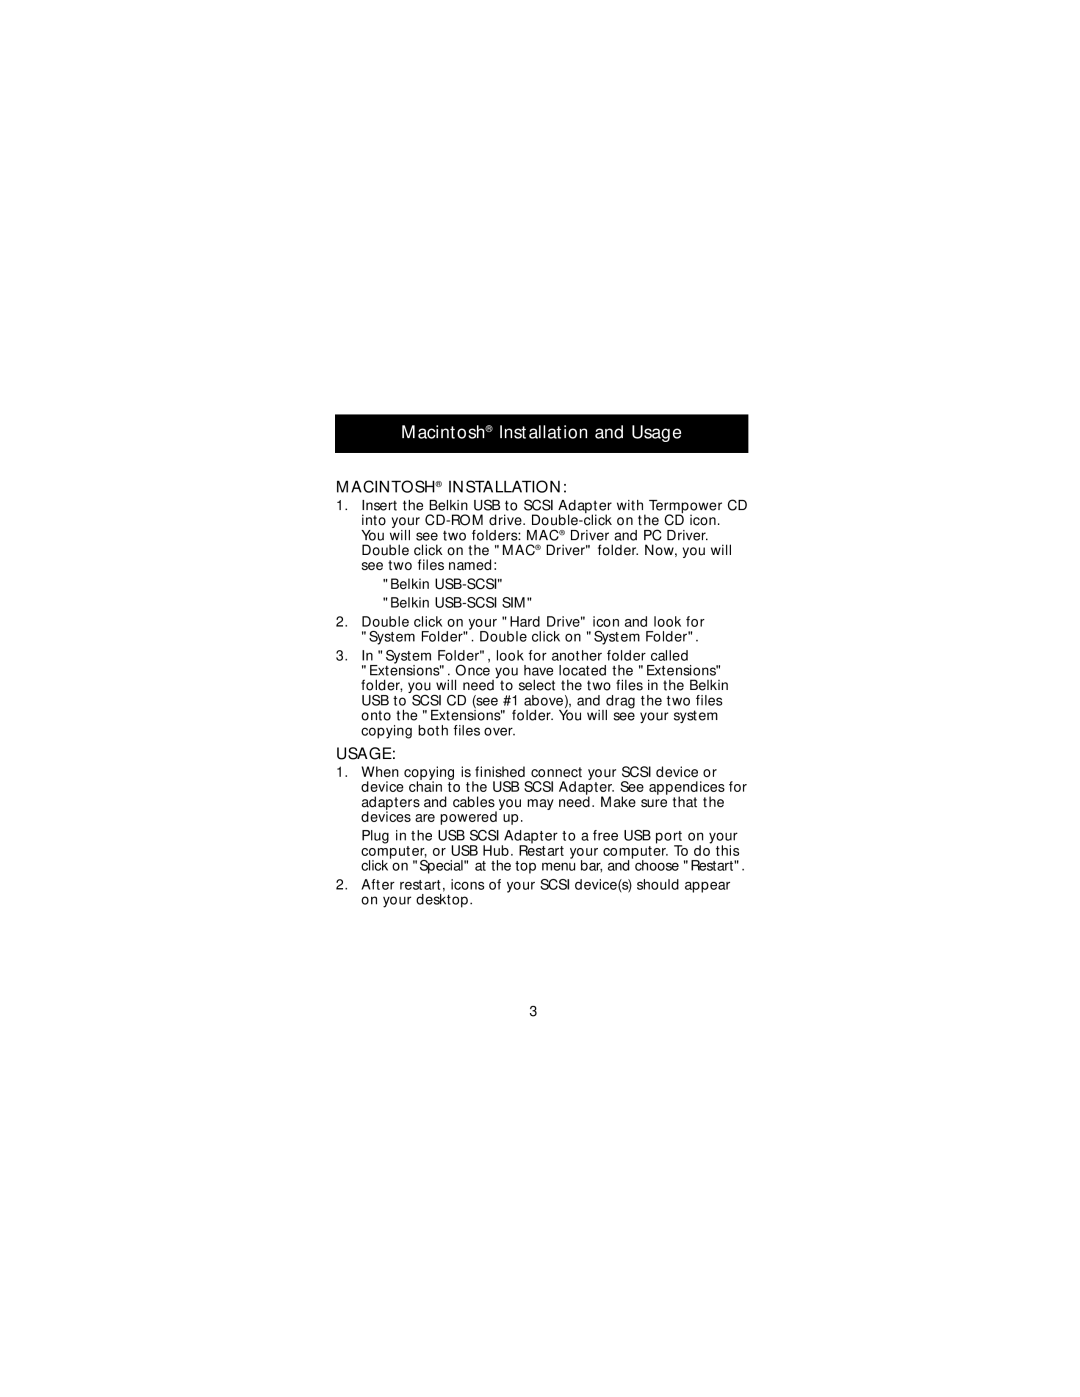 Belkin F5U015-TPW manual Macintosh Installation and Usage 